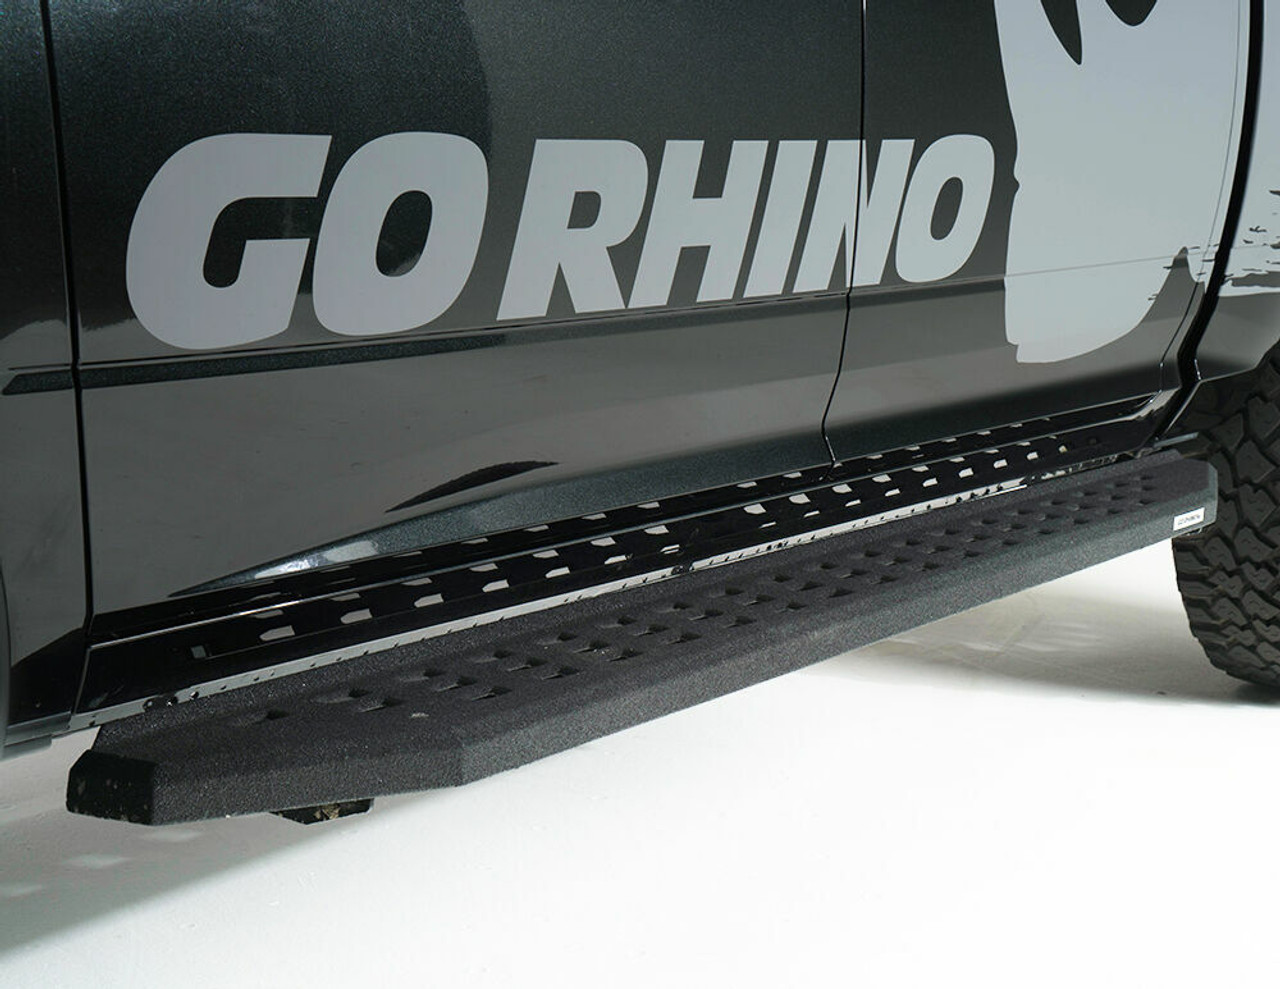 Go Rhino 69410687PC RAM 2500, 3500HD, 2010 - 2021, RB20 Running boards - Complete Kit: RB20 Running boards + Brackets, Galvanized Steel, Textured black, 69400087PC RB20 + 6941065 RB Brackets